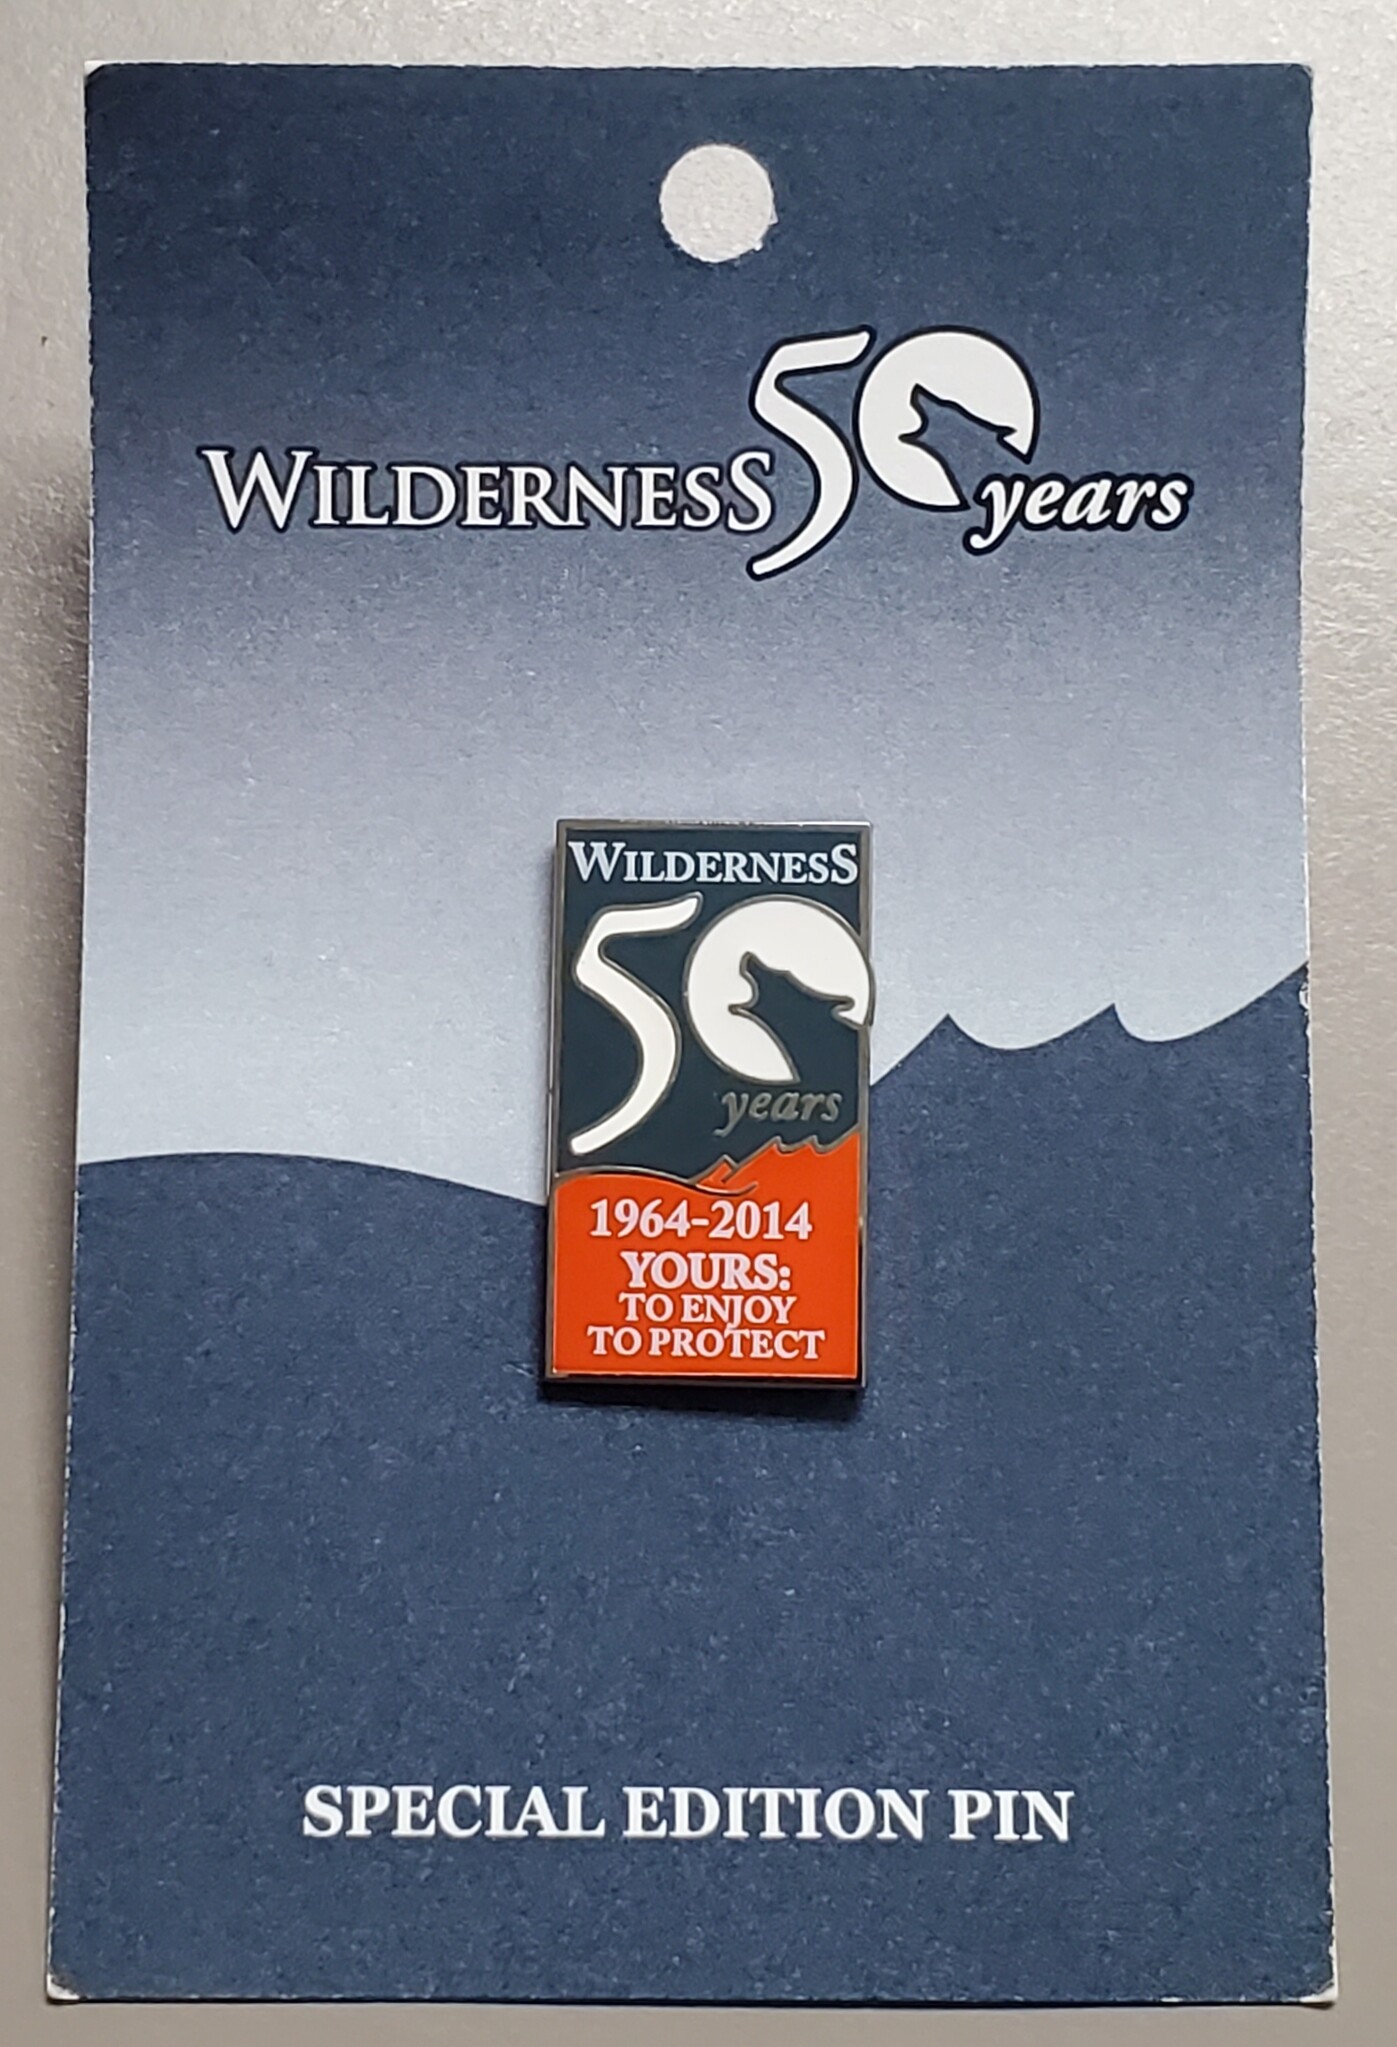 Wilderness 50 pin